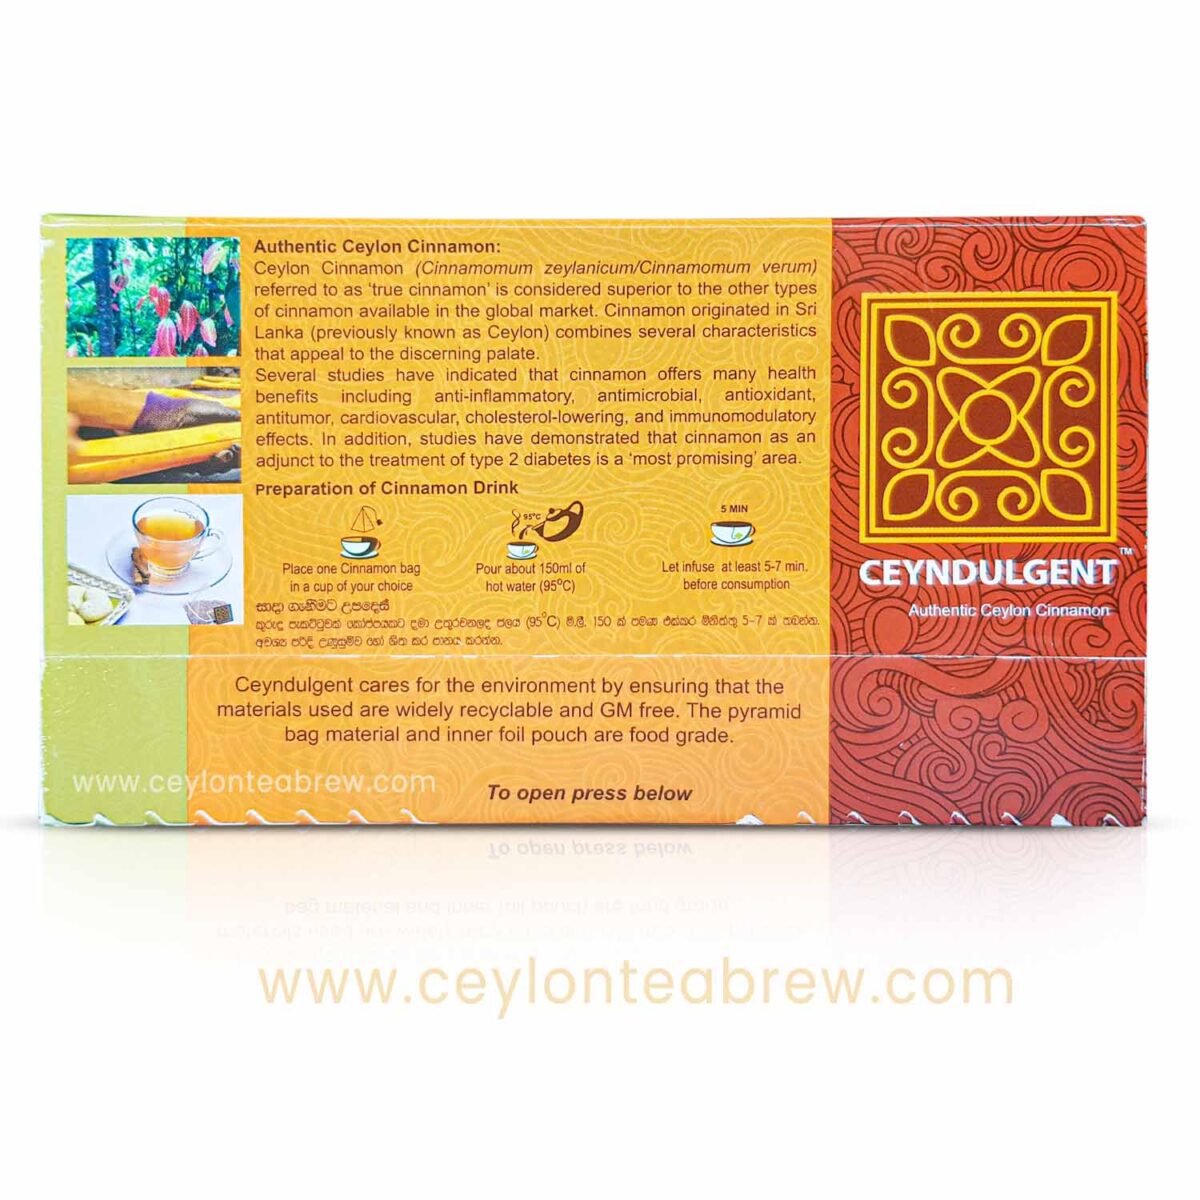 Ceyndulgent Ceylon Pure Cinnamon drink 20 bags